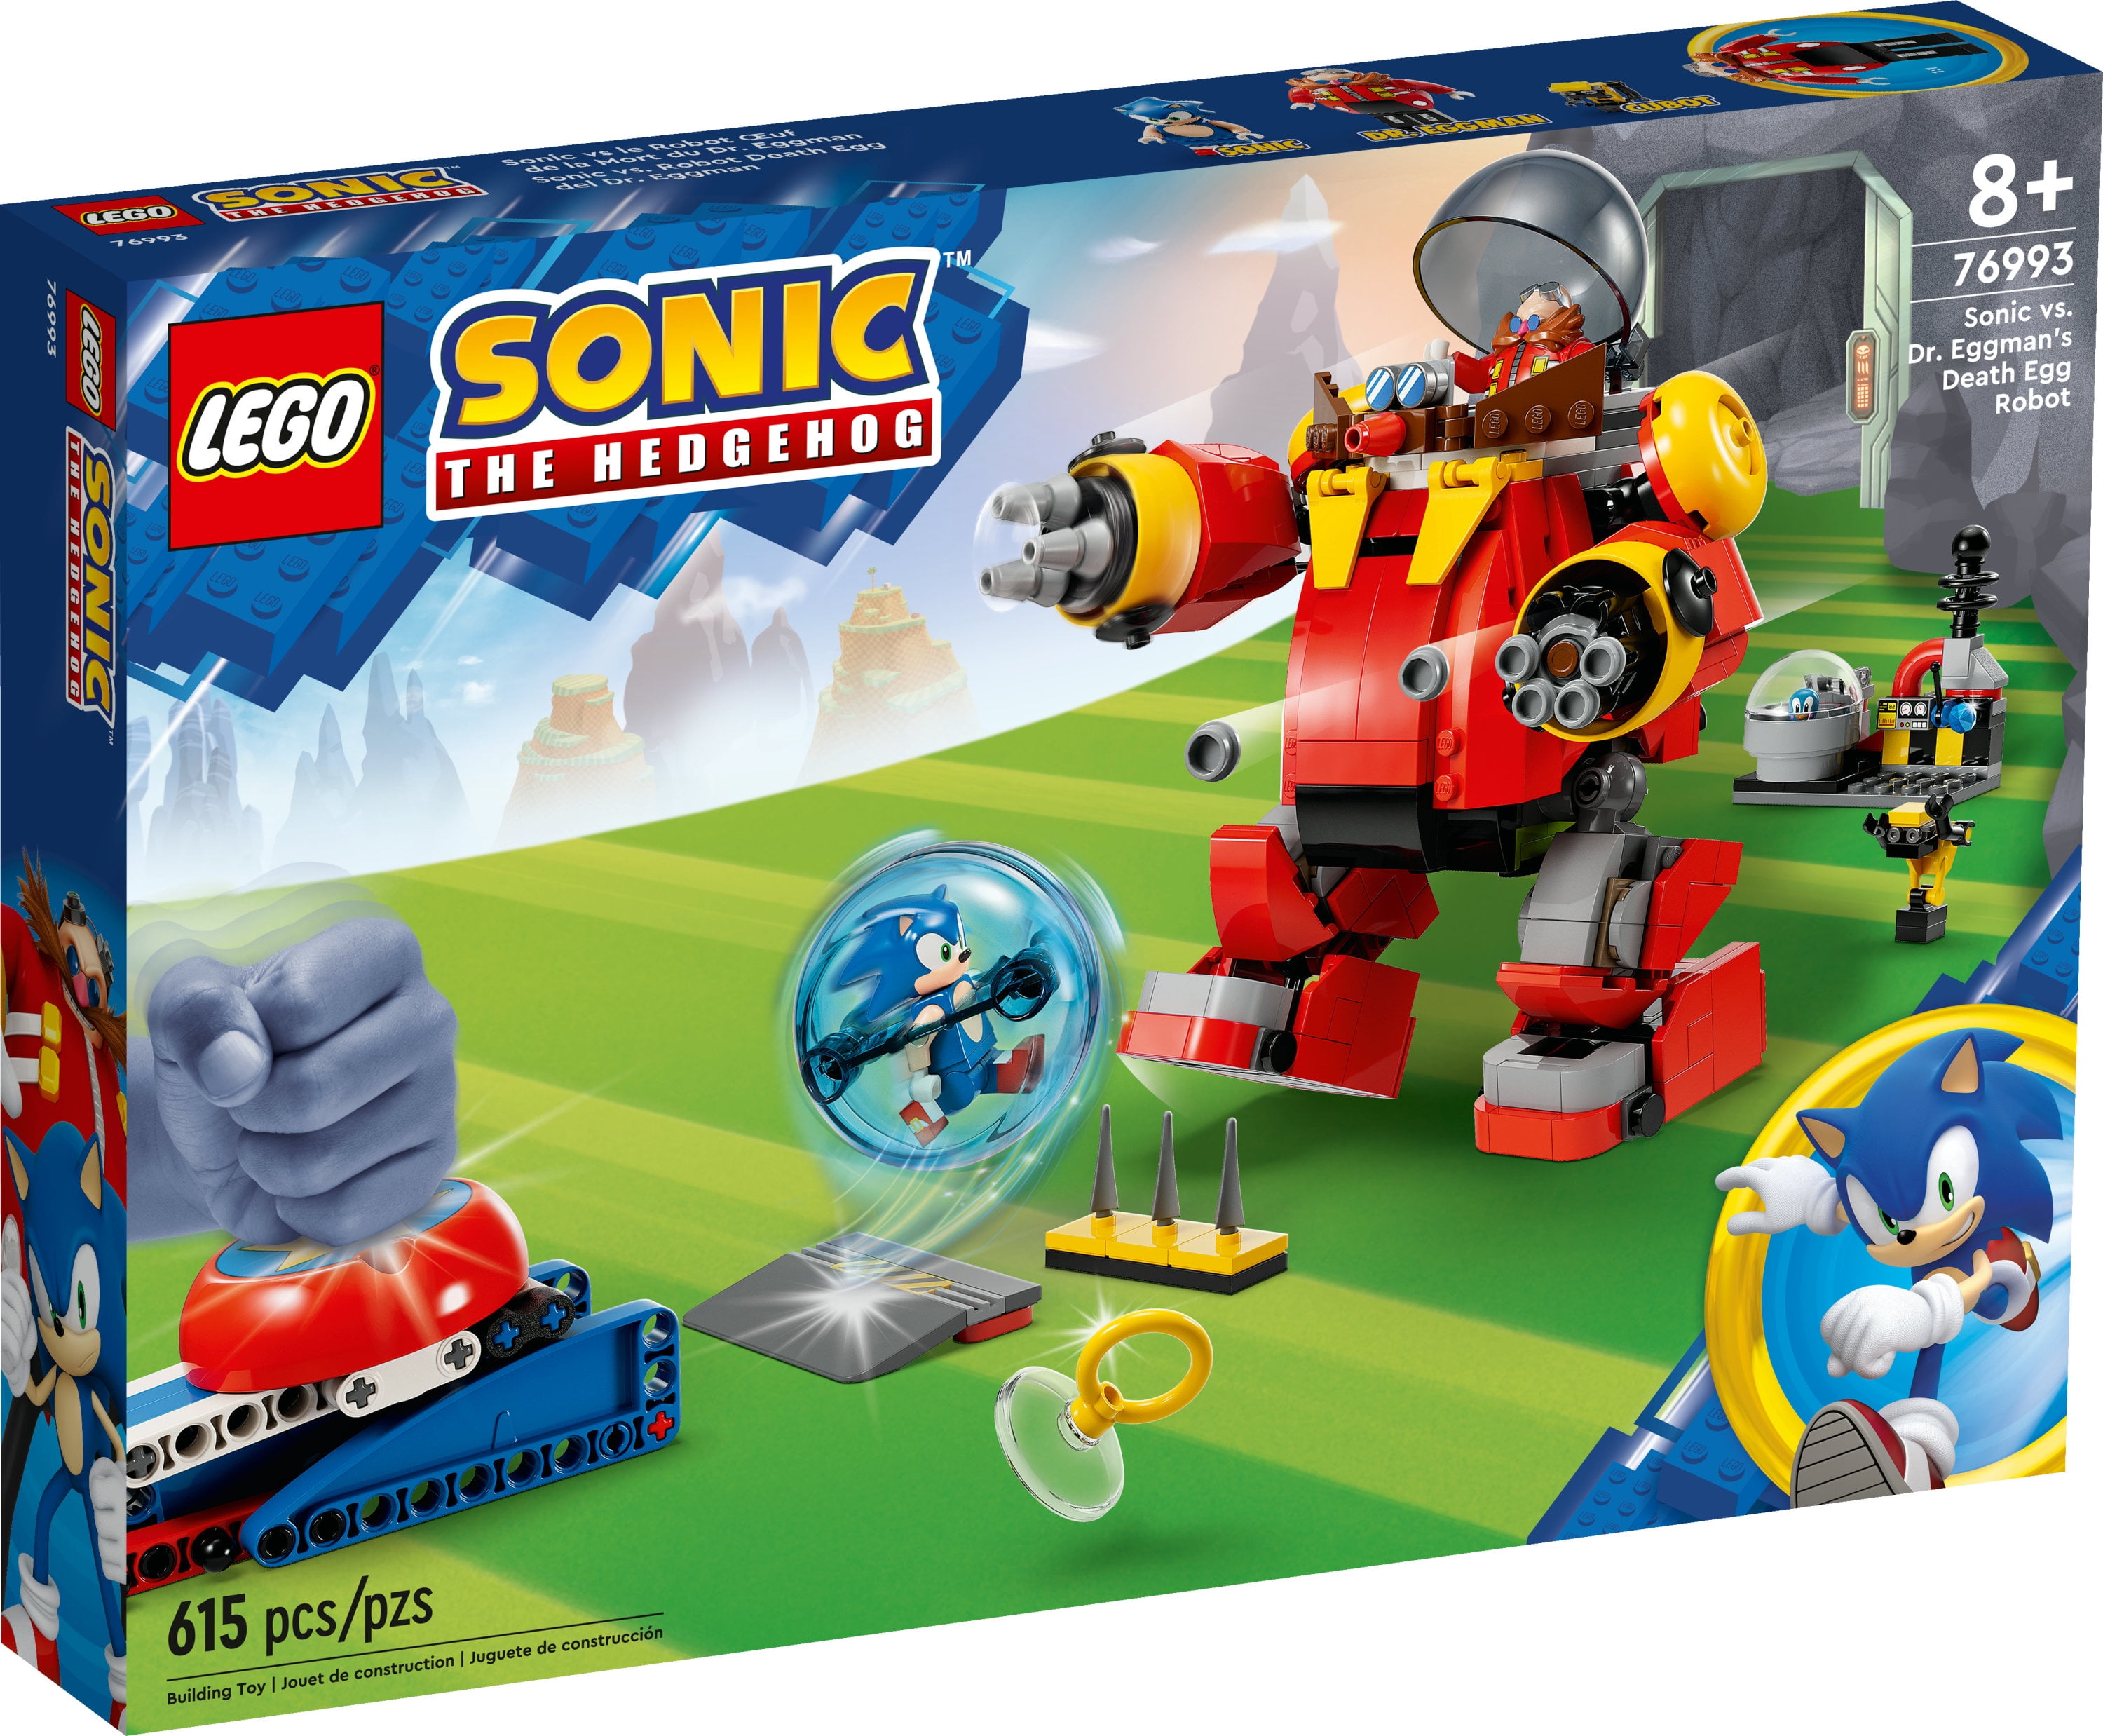 Sonic x LEGO - New Playsets & Dr. Eggman Segment